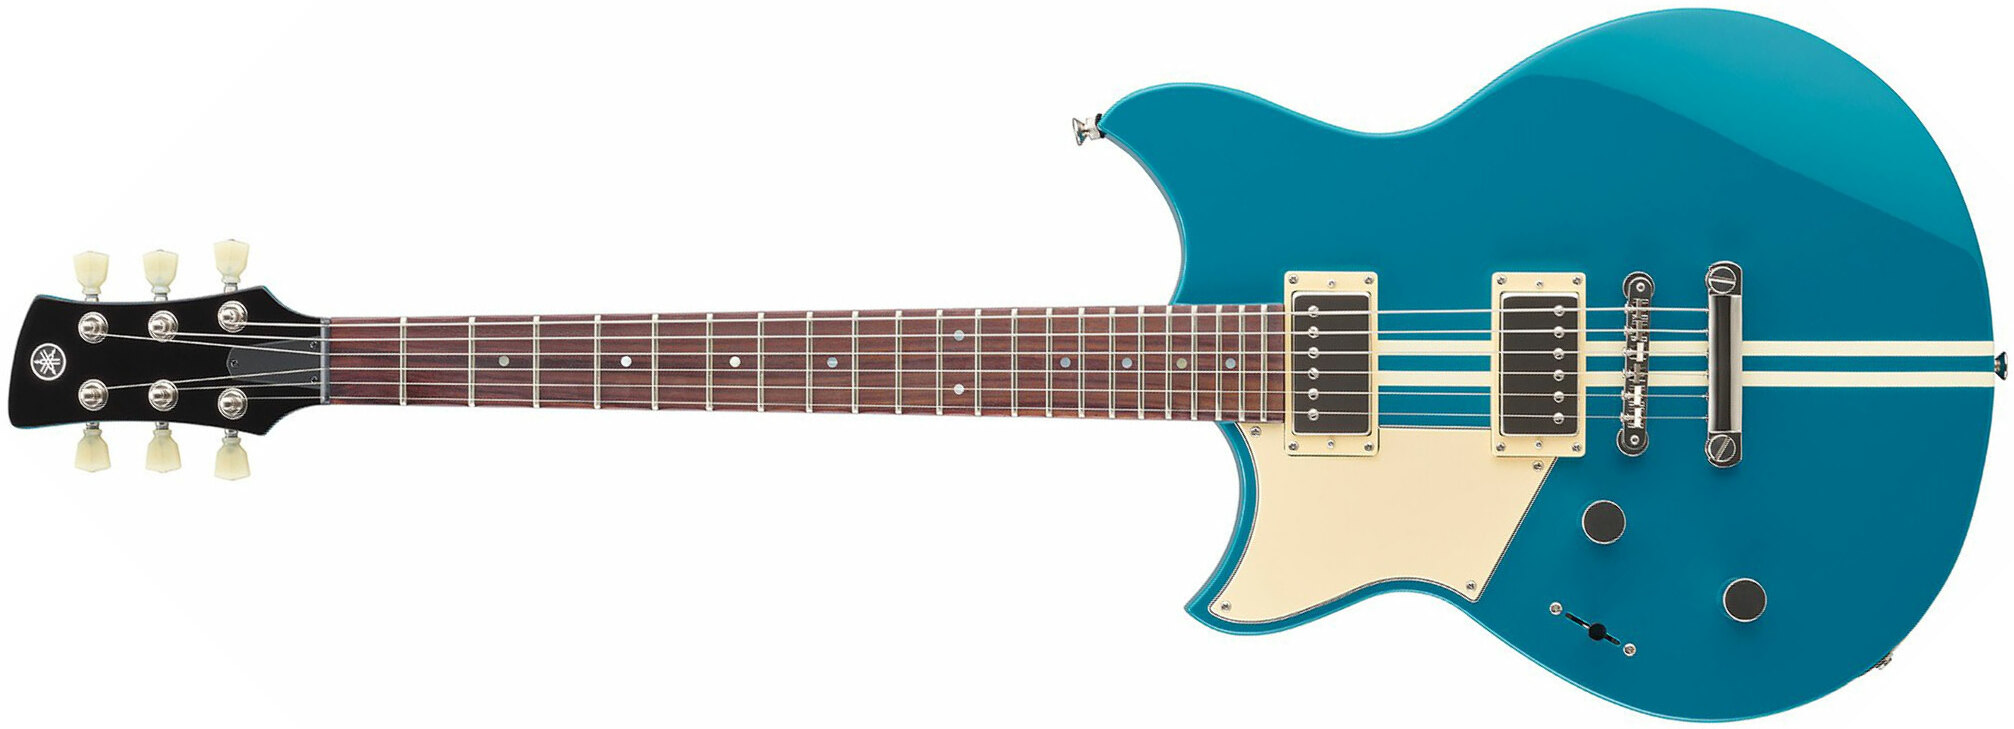 Yamaha Rse20l Revstar Element Lh Gaucher Hh Ht Rw - Swift Blue - Left-handed electric guitar - Main picture